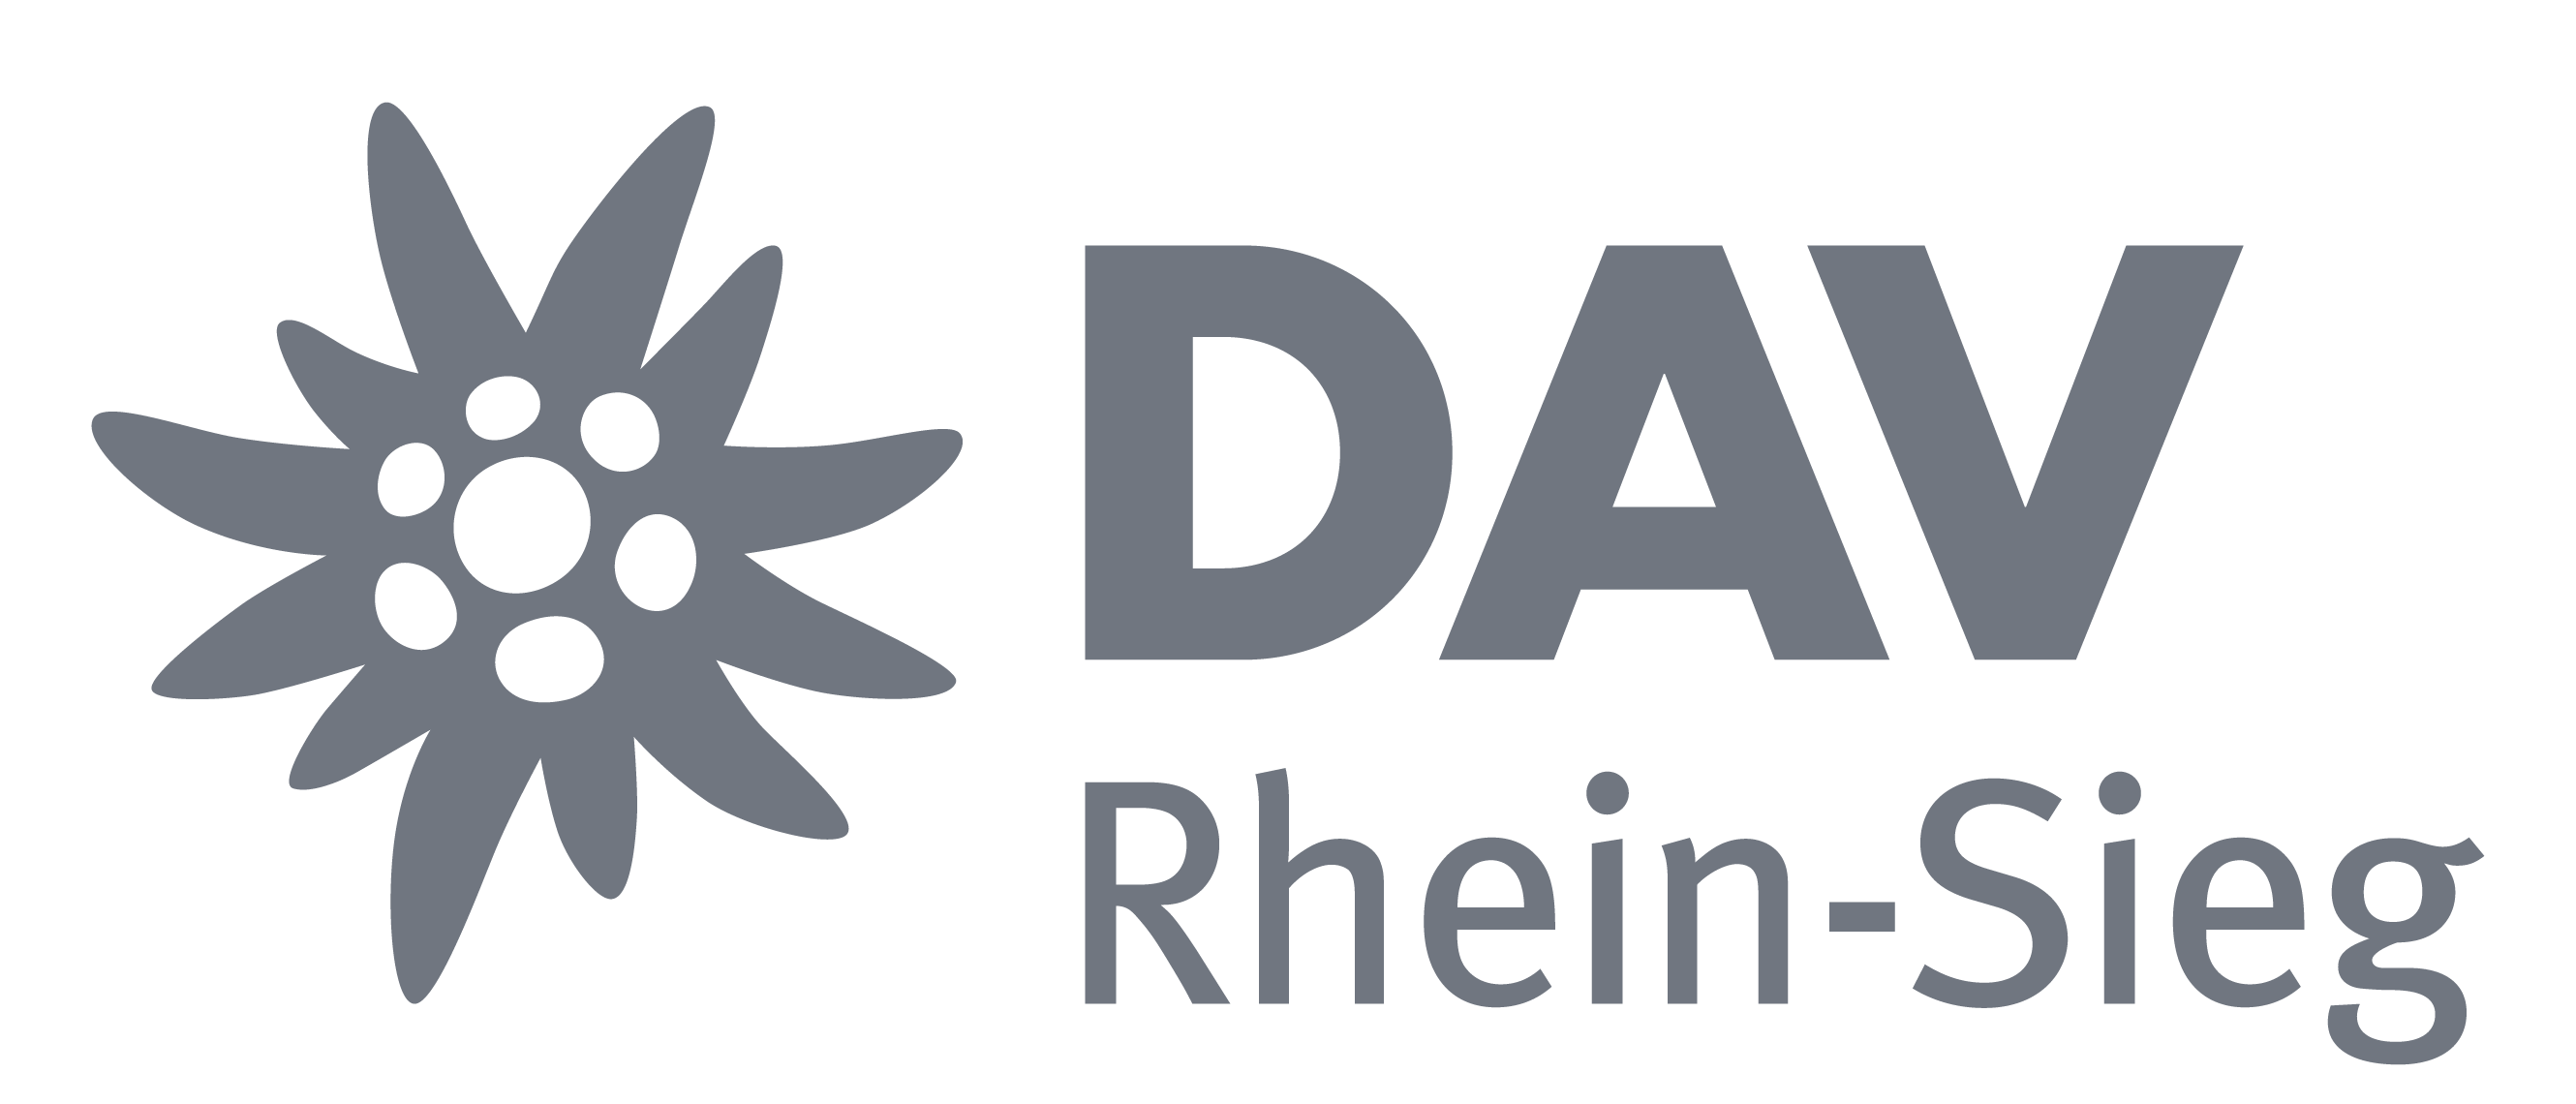 DAV Sektion Rhein-Sieg